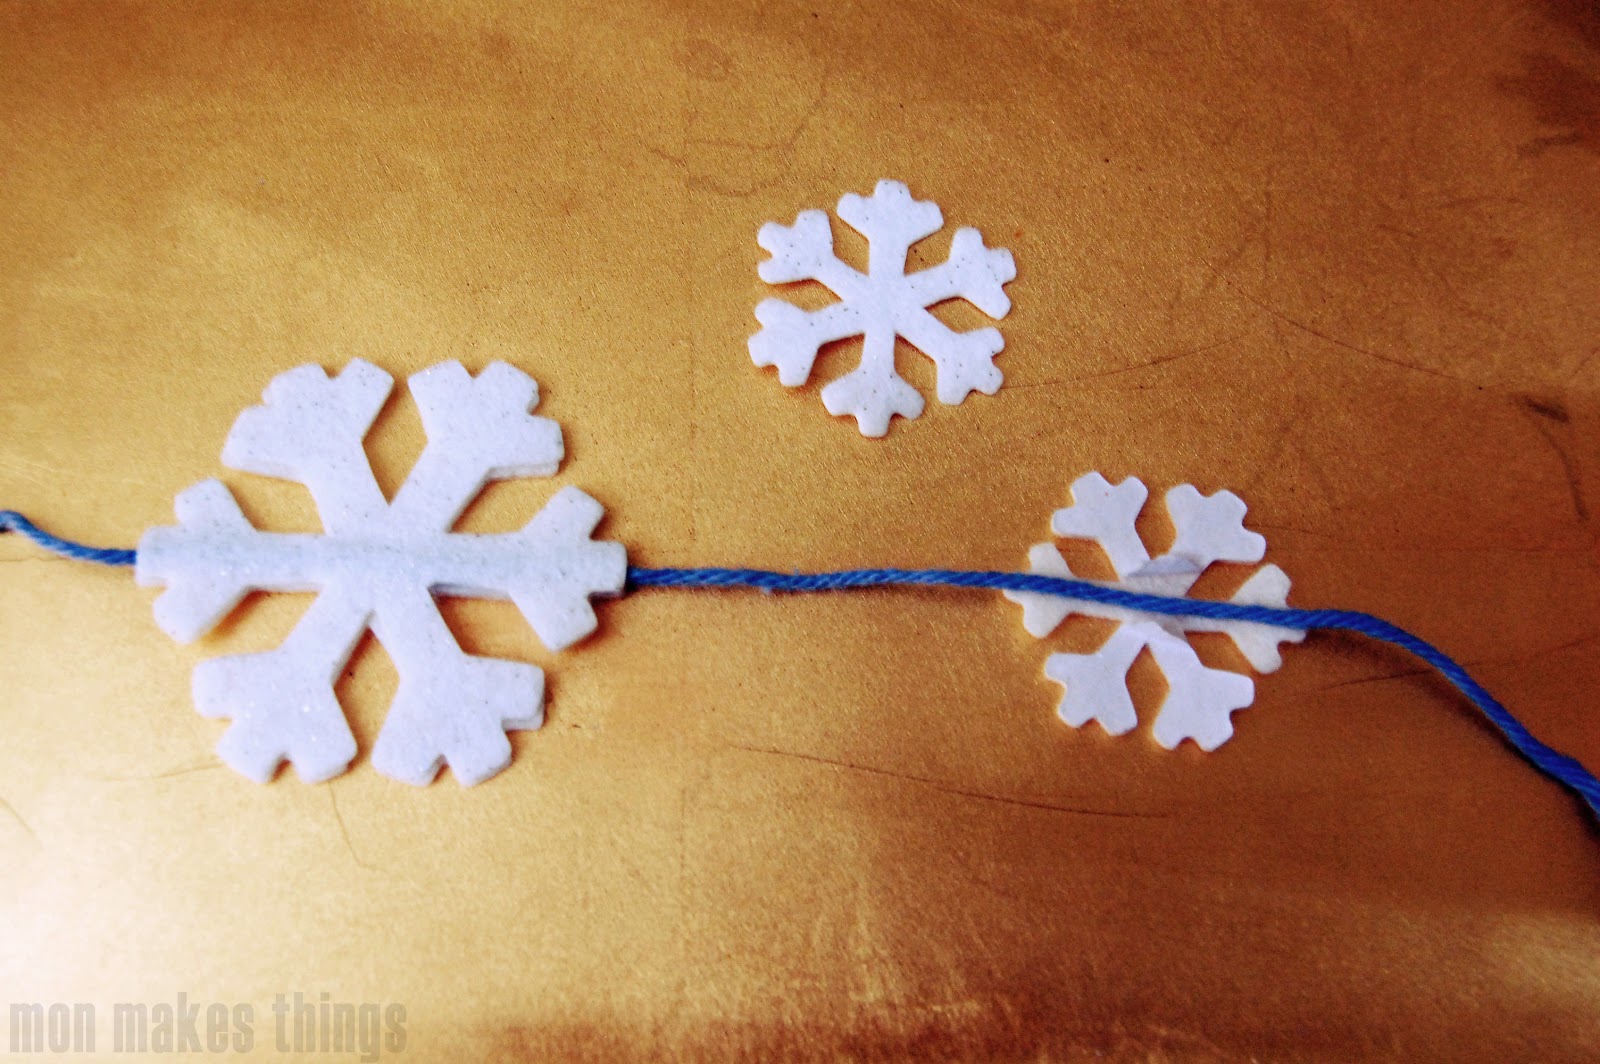 mon makes things: Day 02: DIY Snowflake Garland